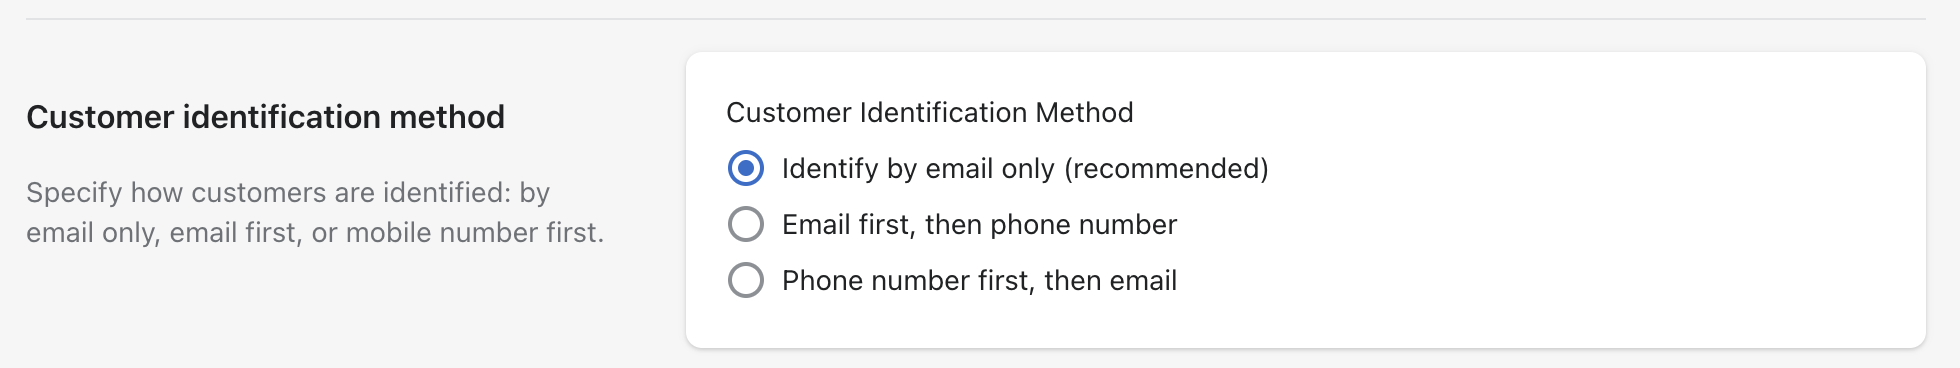 customer_identification_method.png